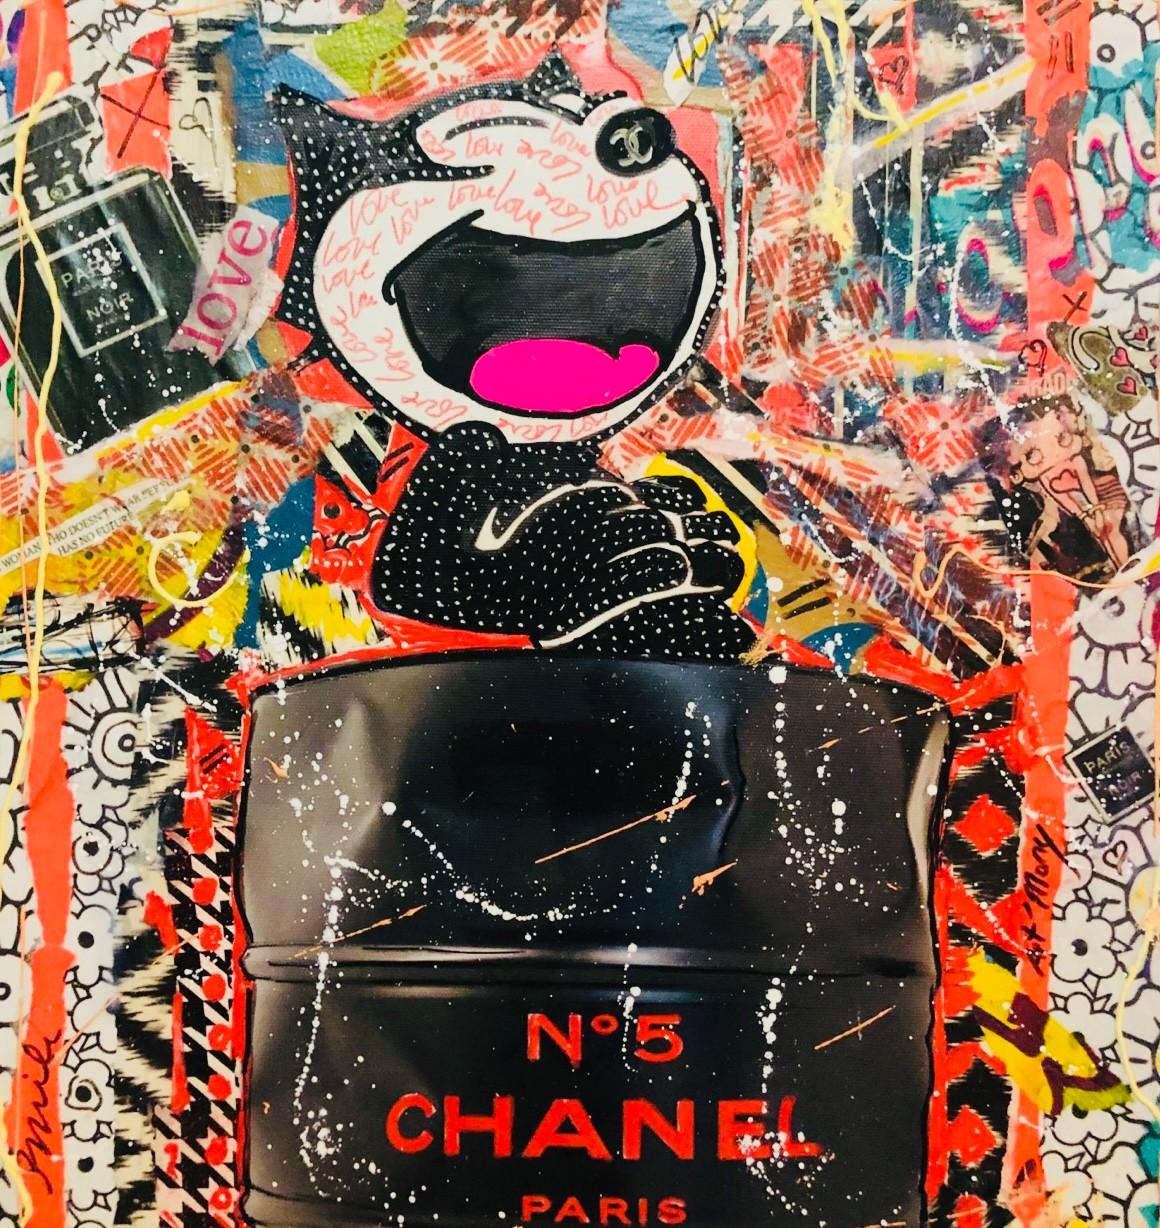  Happy Félix Chanel - Mixed Media Art by Patricia Ducept,